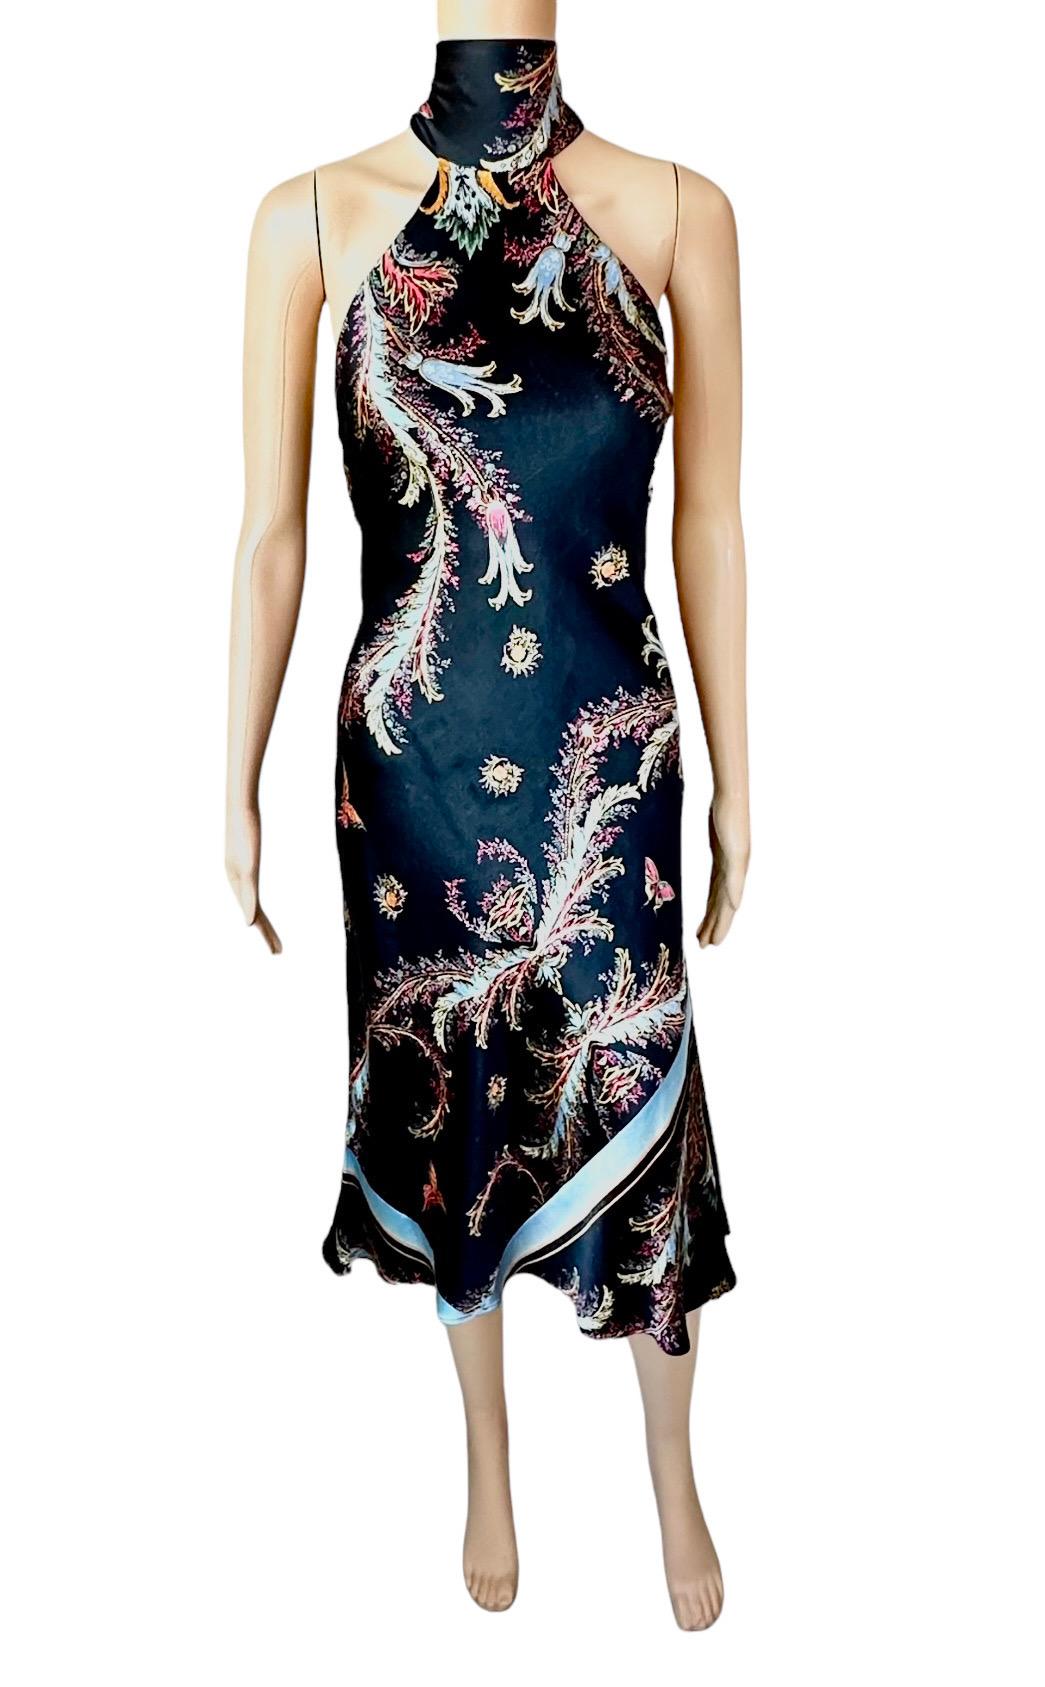 Roberto Cavalli F/W 2004 Halter Chinoiserie Print Silk Midi Dress Size L

FOLLOW US ON INSTAGRAM @OPULENTADDICT